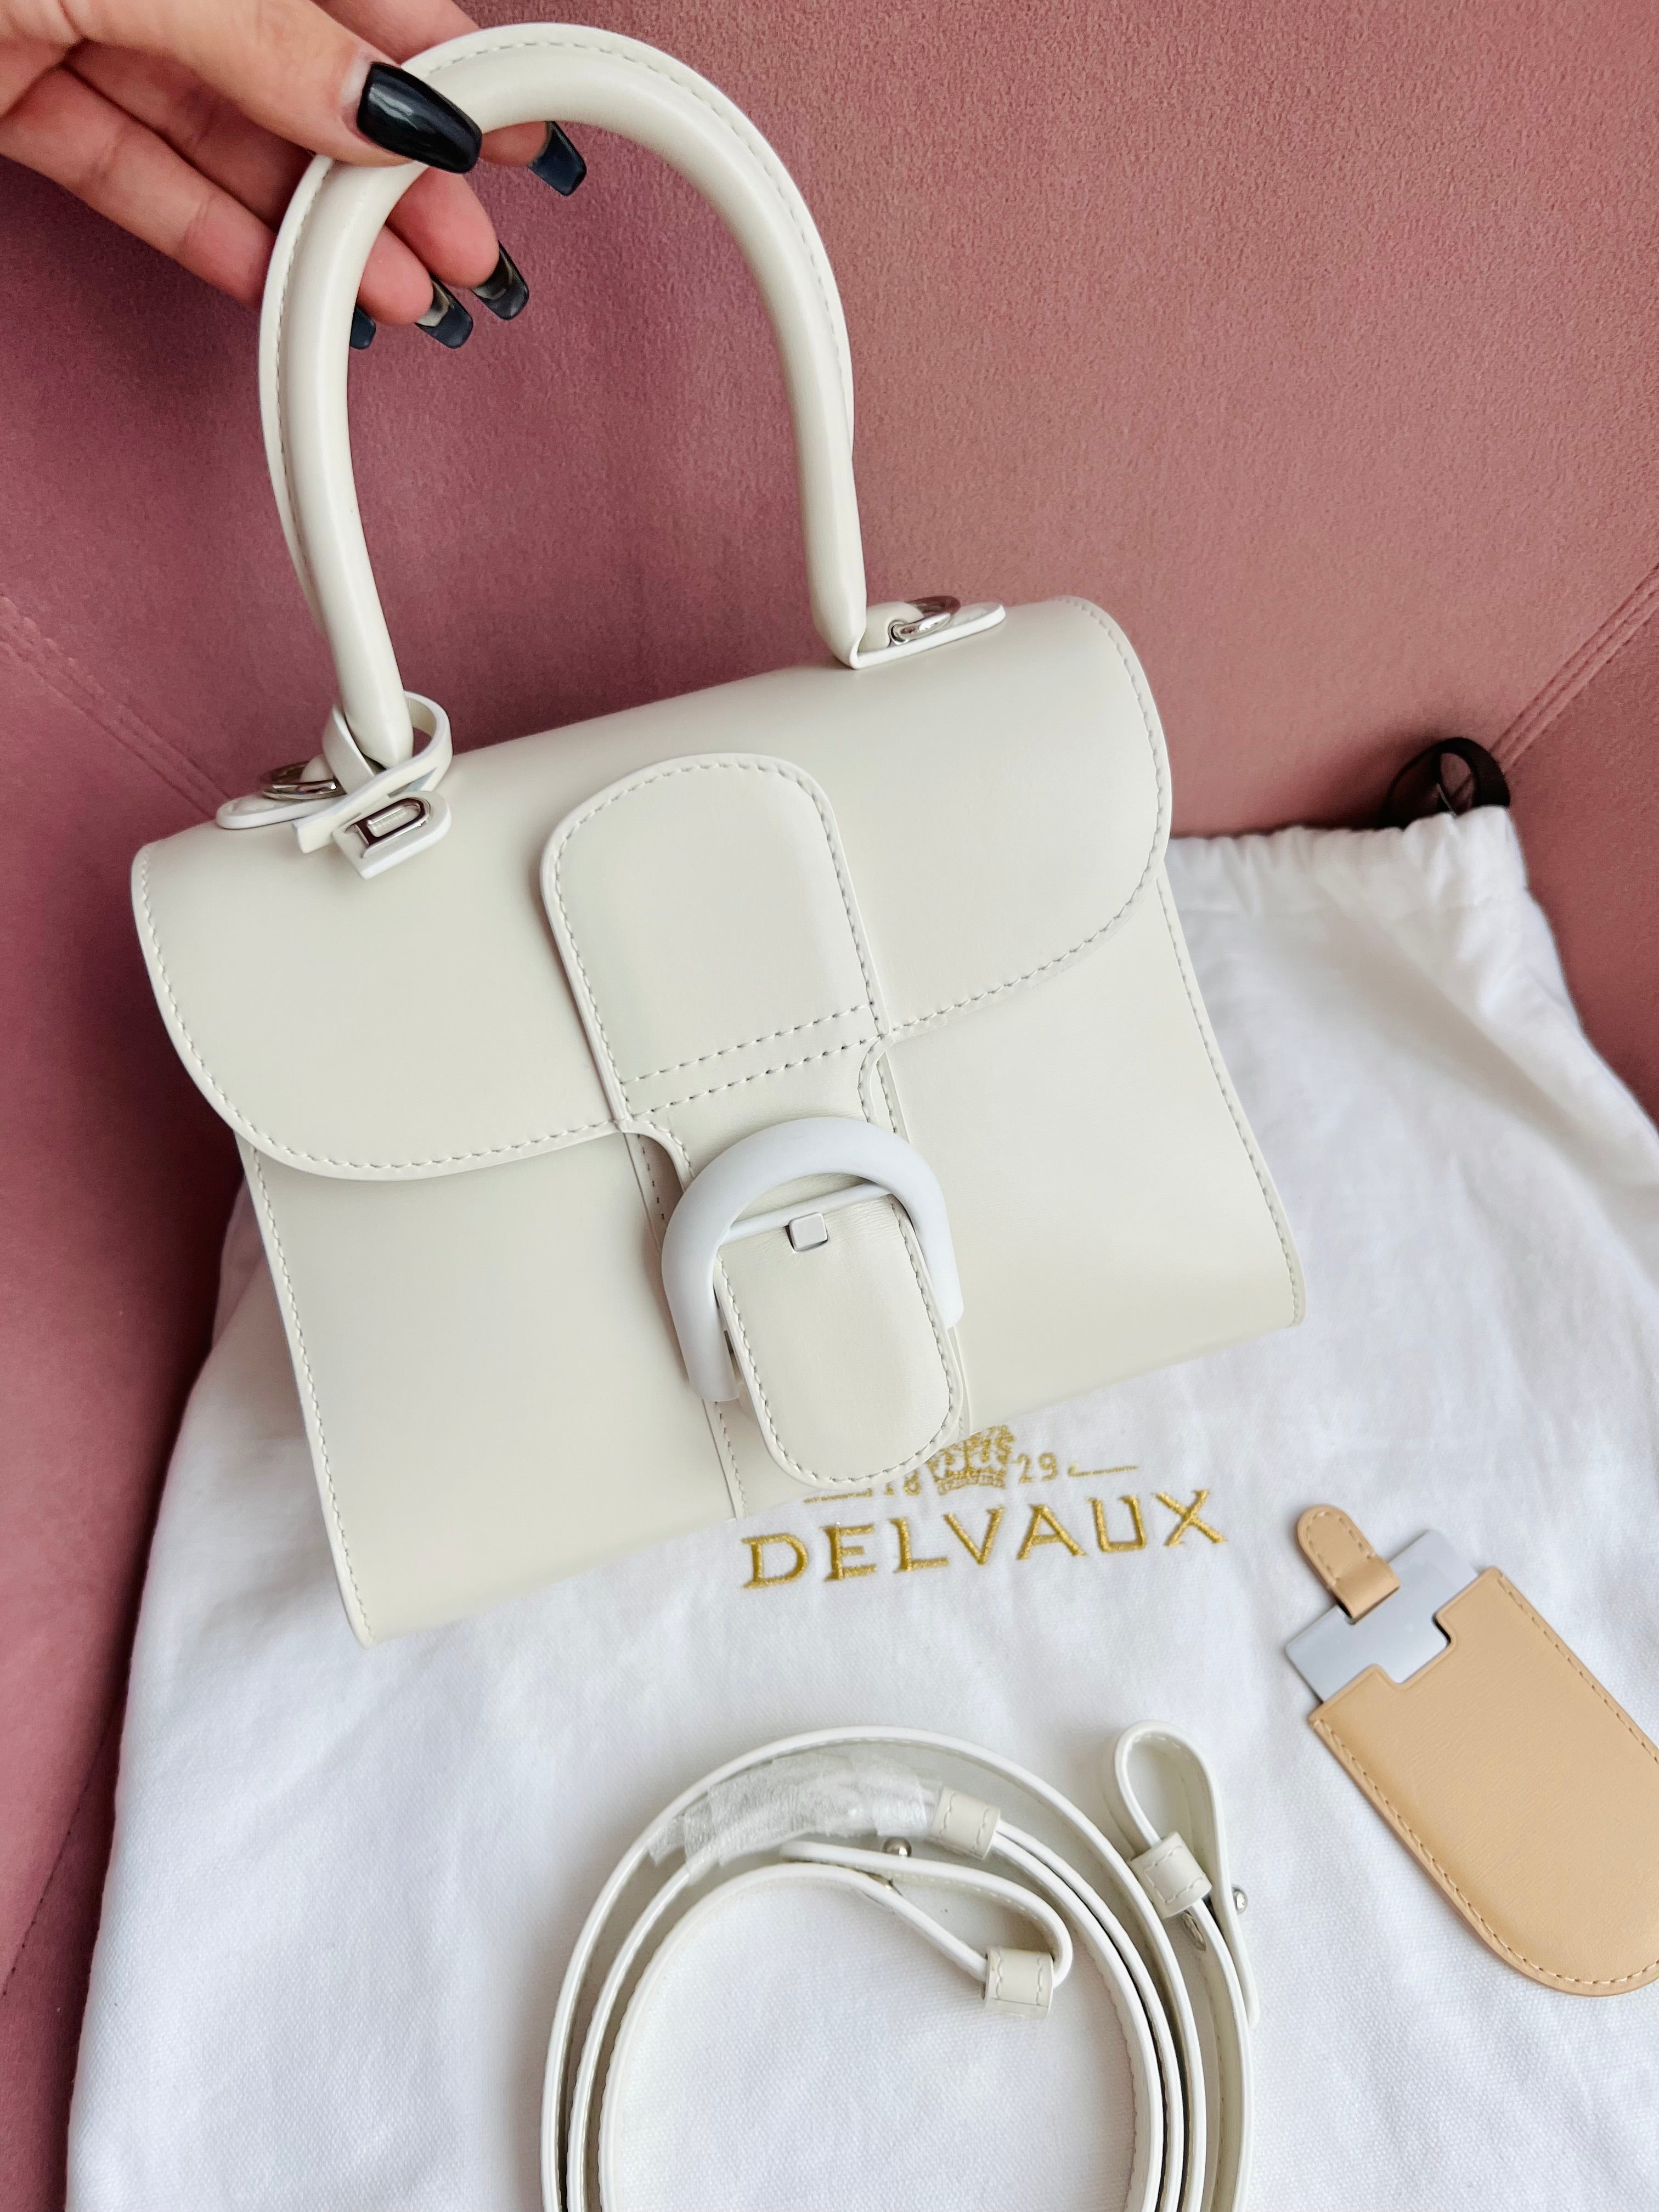 Delvaux Brilliant Bag – Beccas Bags